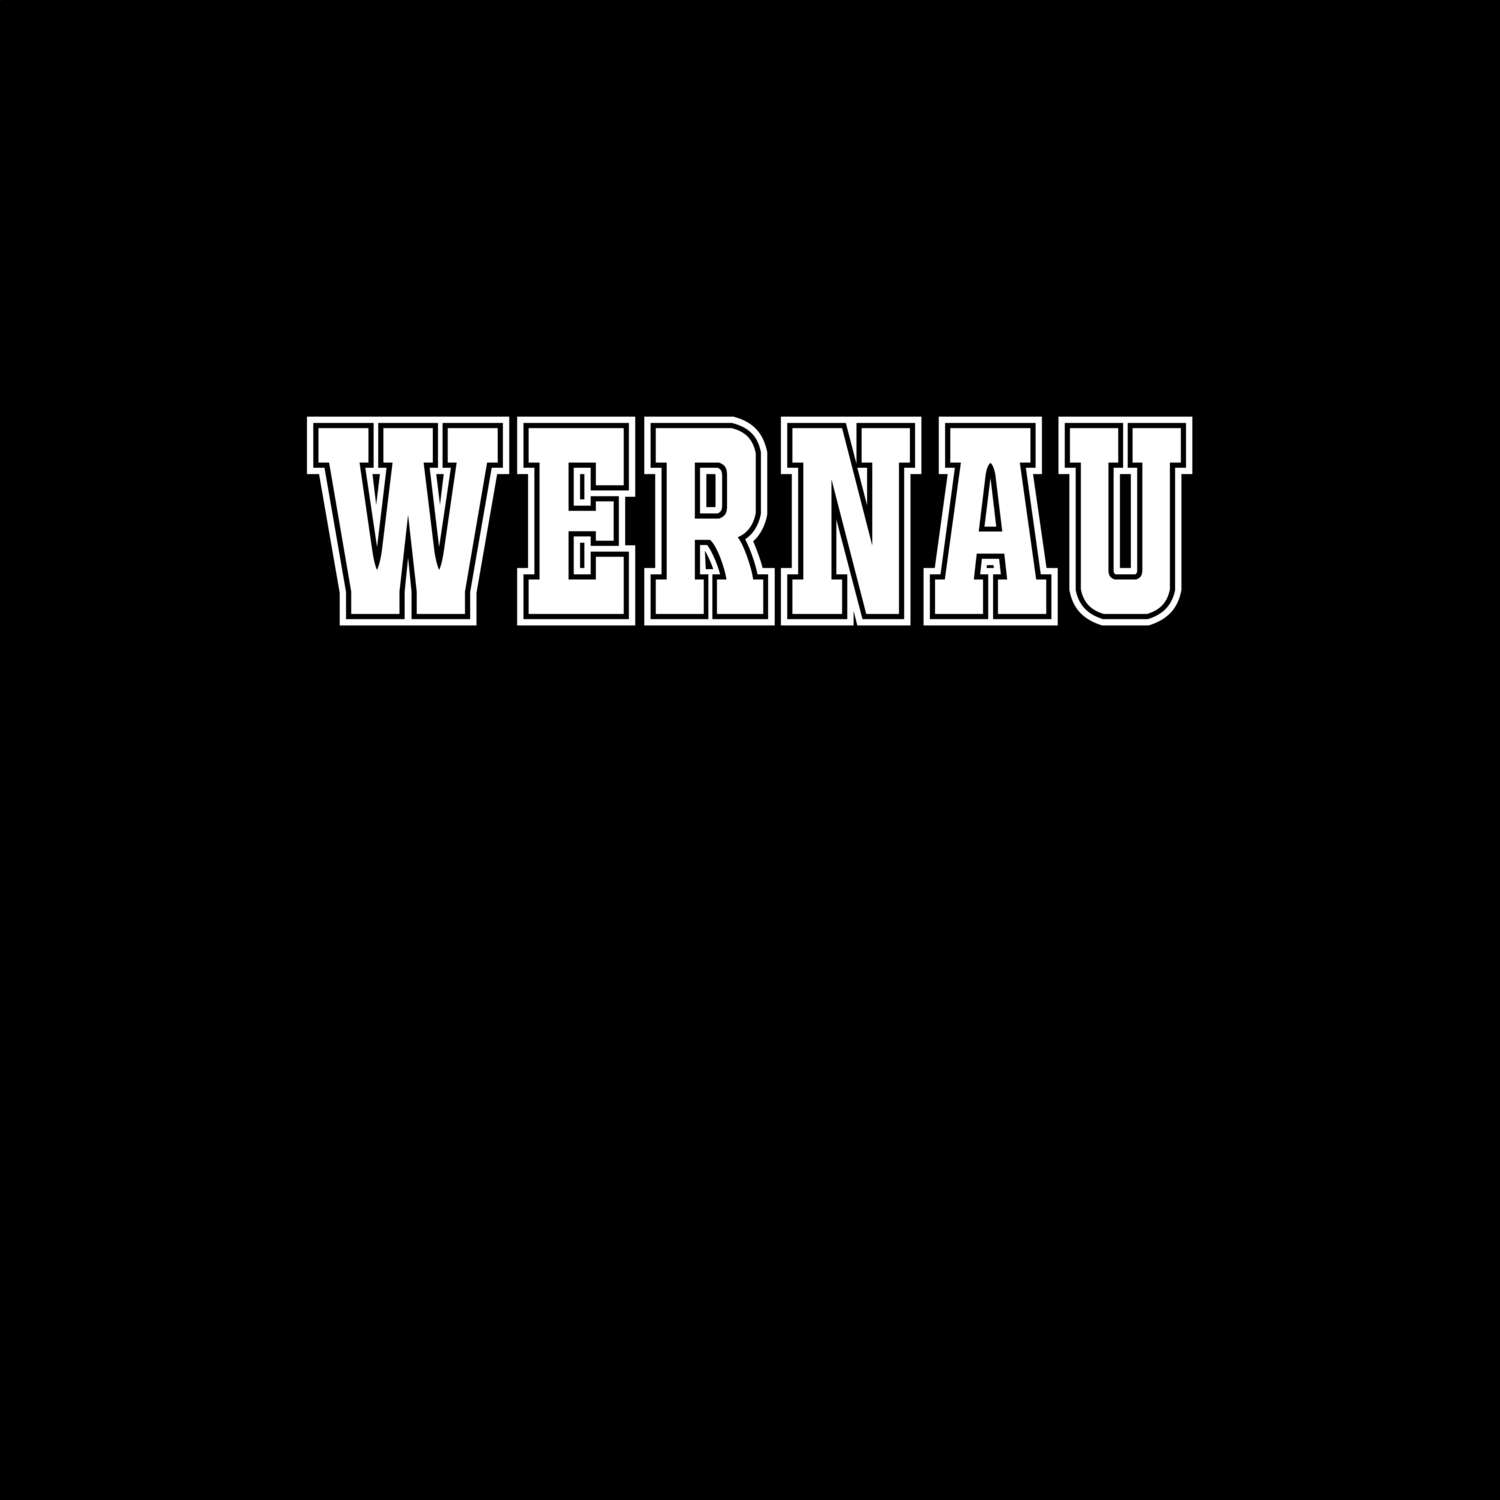 Wernau T-Shirt »Classic«